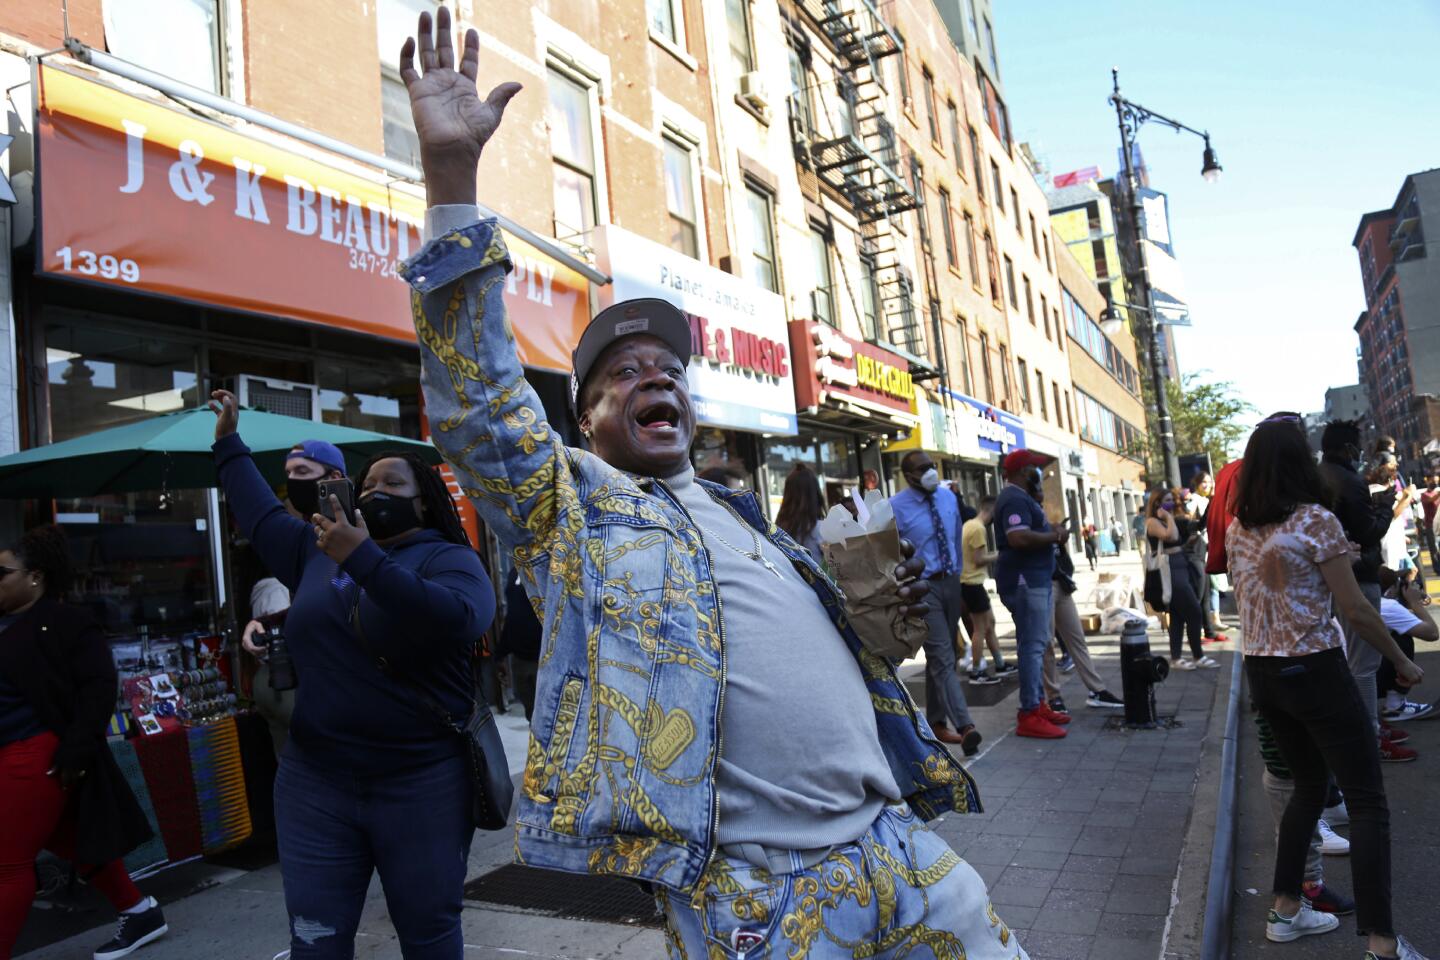 Marcel Cothron sings "Na na na na, hey hey goodbye" with a large crowd gathered on Fulton Street in the Brooklyn borough of New York, to celebrate Joe Biden's victory over President Donald Trump, Saturday, Nov. 7, 2020. (AP Photo/Jessie Wardarski)